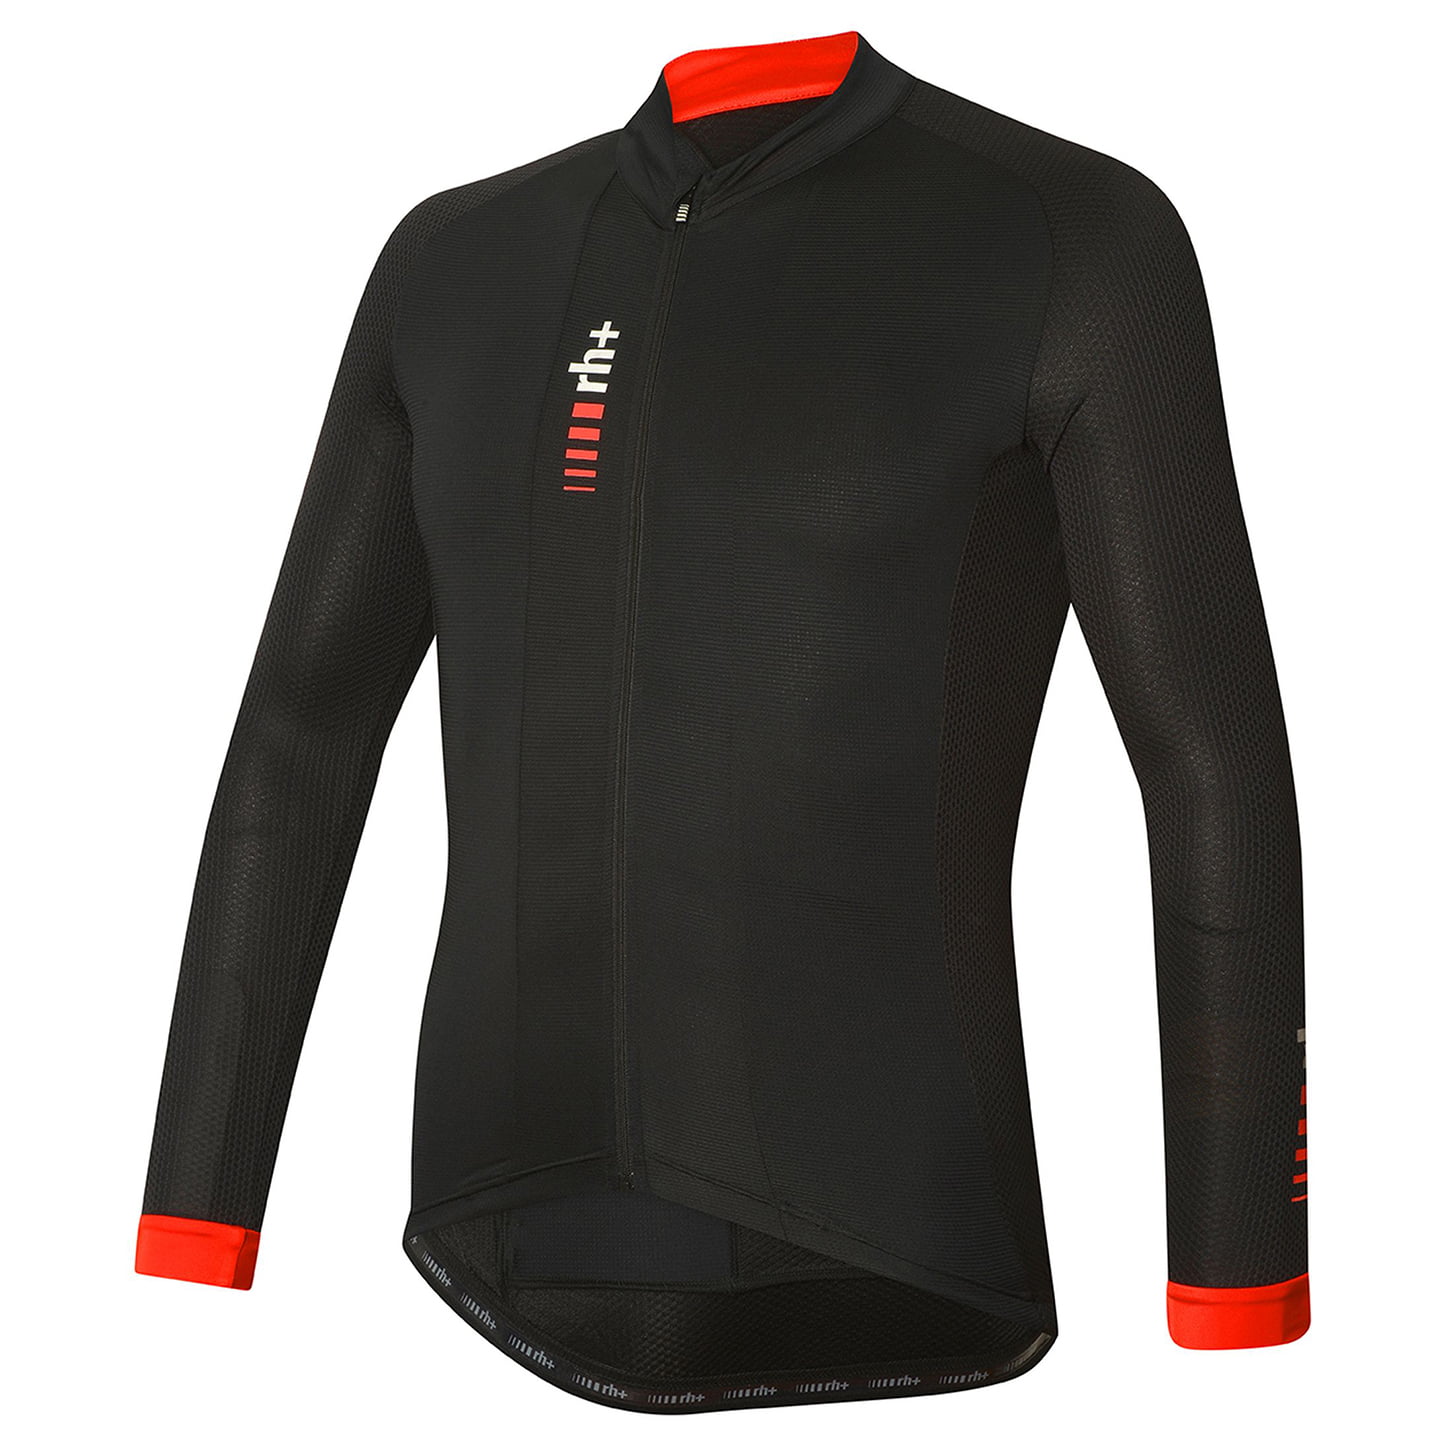 rh+ XYZ Long Sleeve Jersey Long Sleeve Jersey, for men, size L, Cycling jersey, Cycling clothing